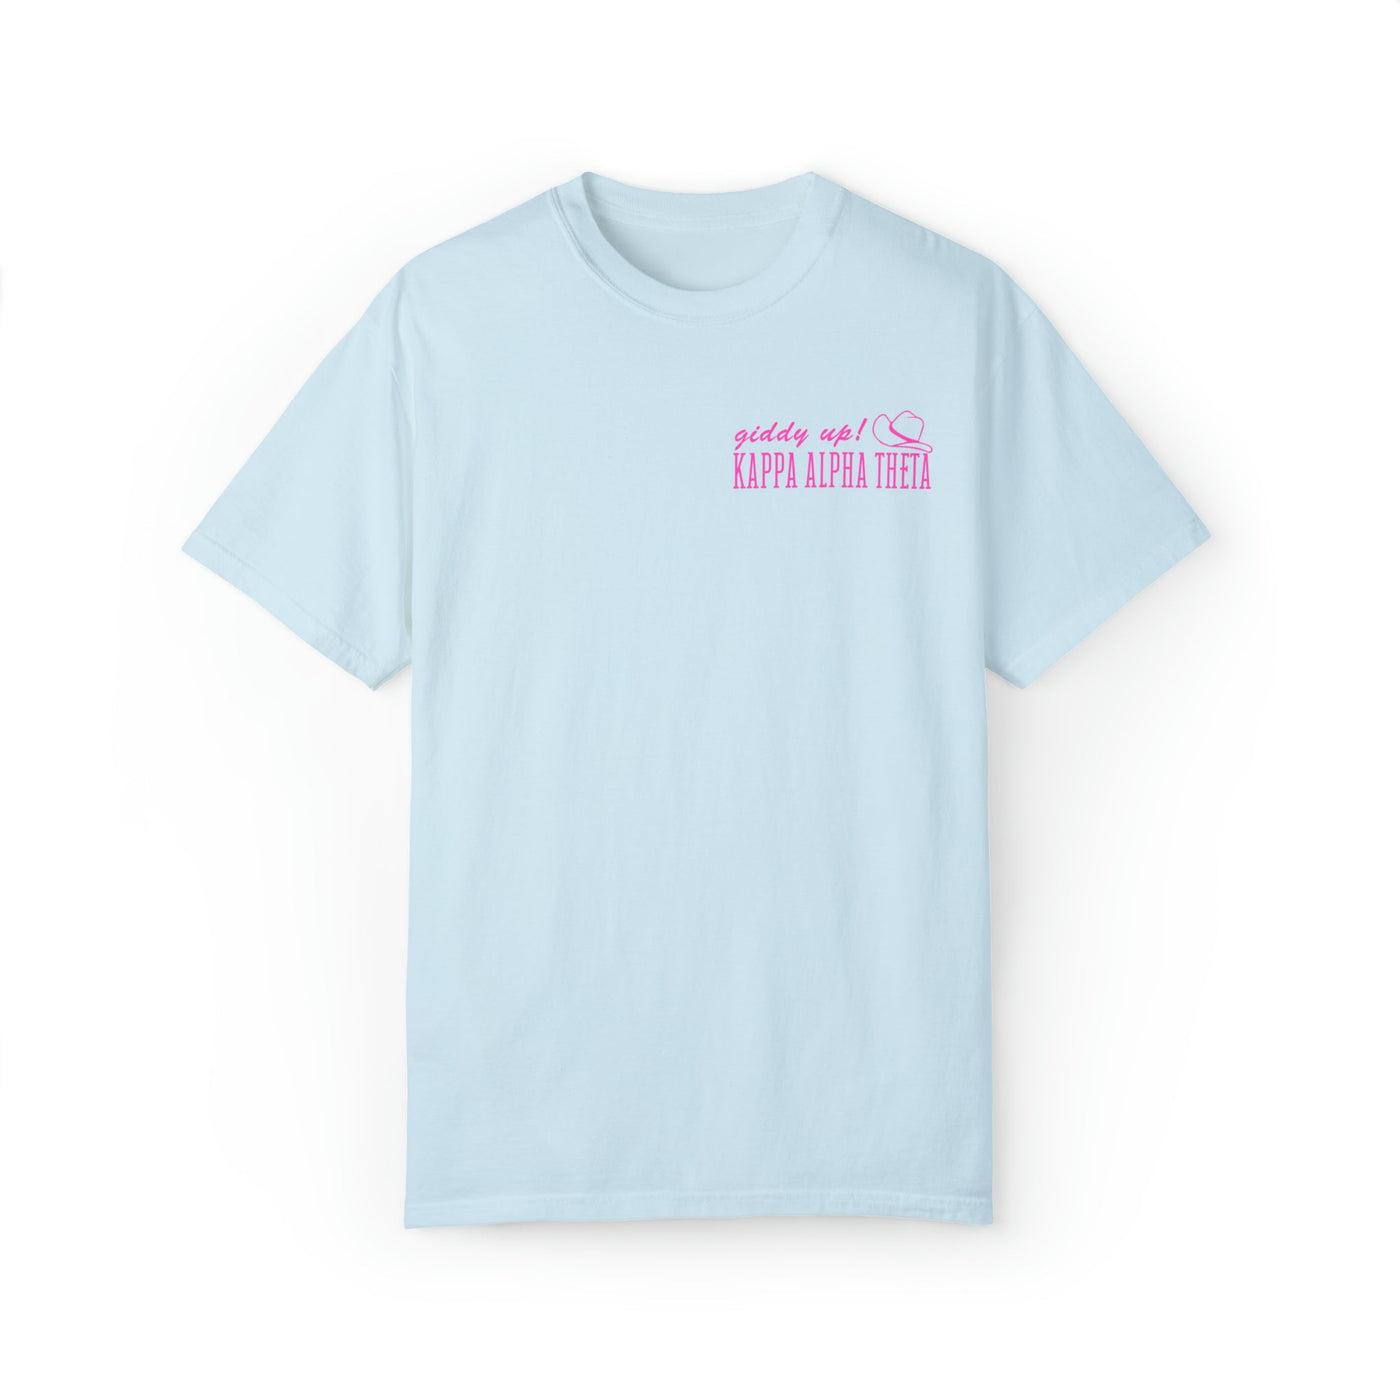 Kappa Alpha Theta Country Western Pink Sorority T-shirt